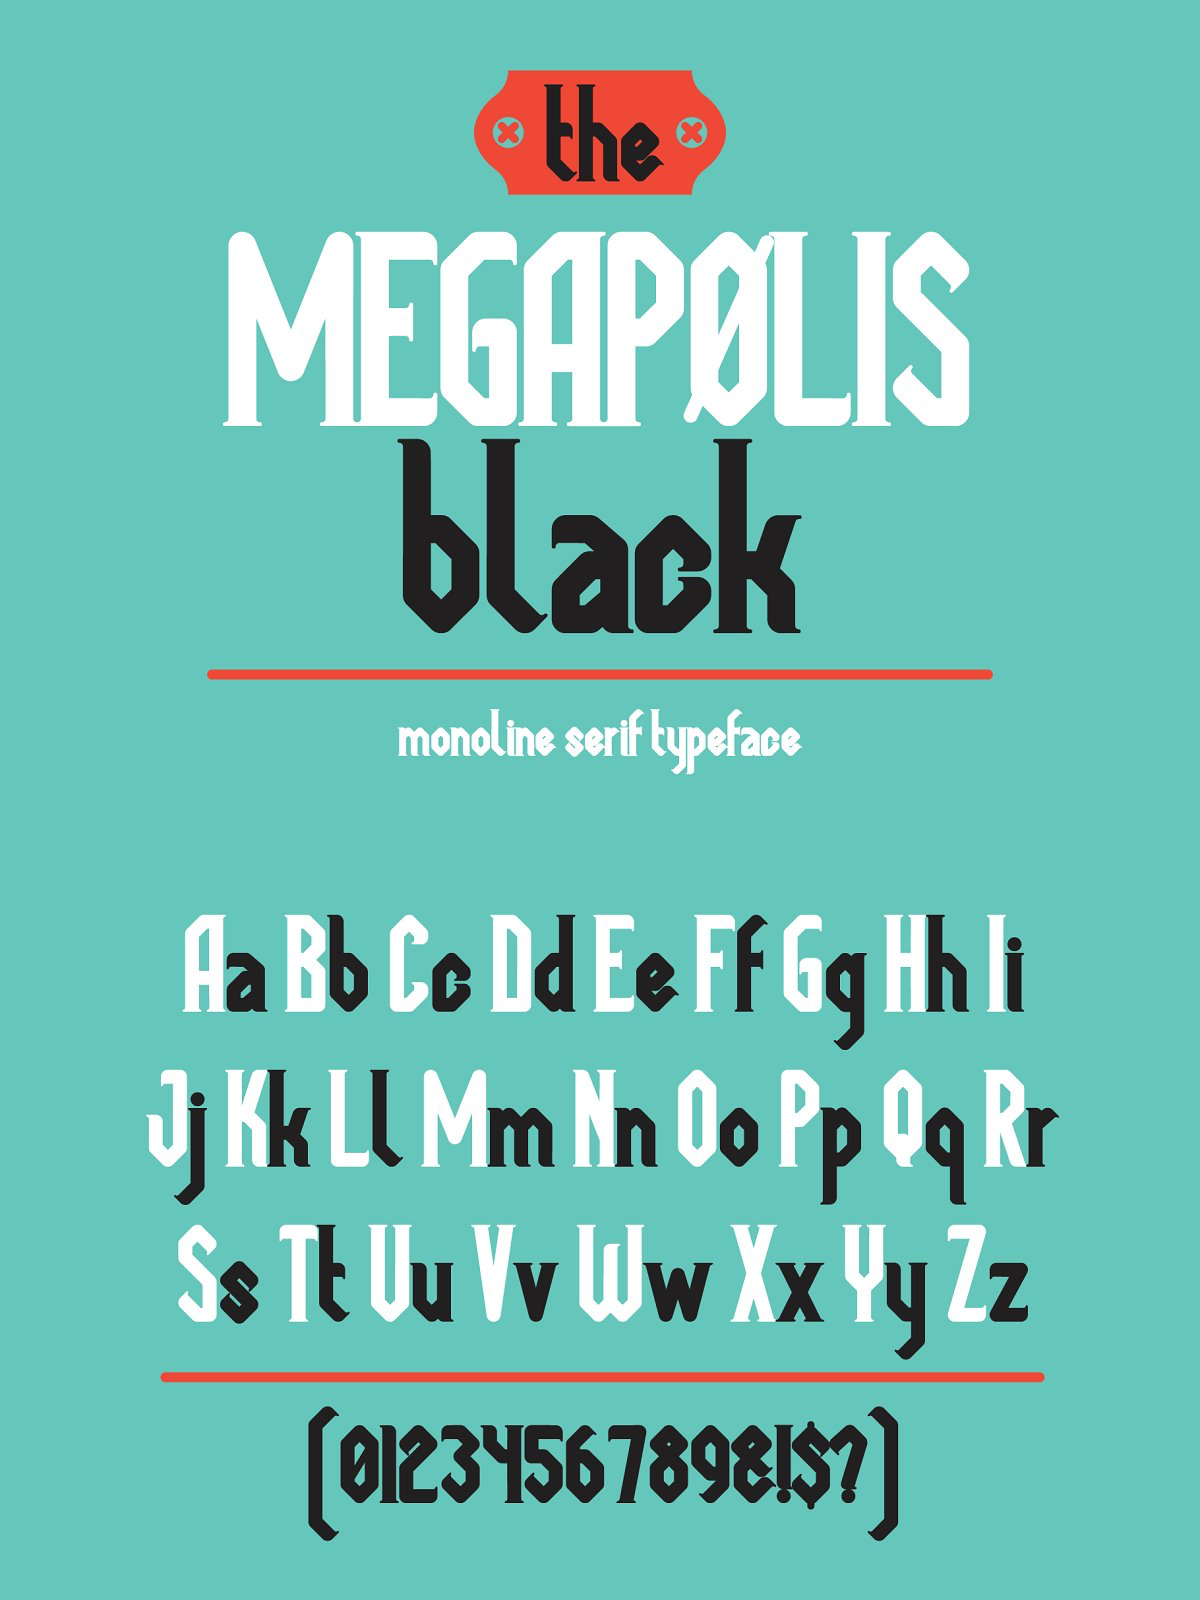 Megapolis black pinterest image preview.